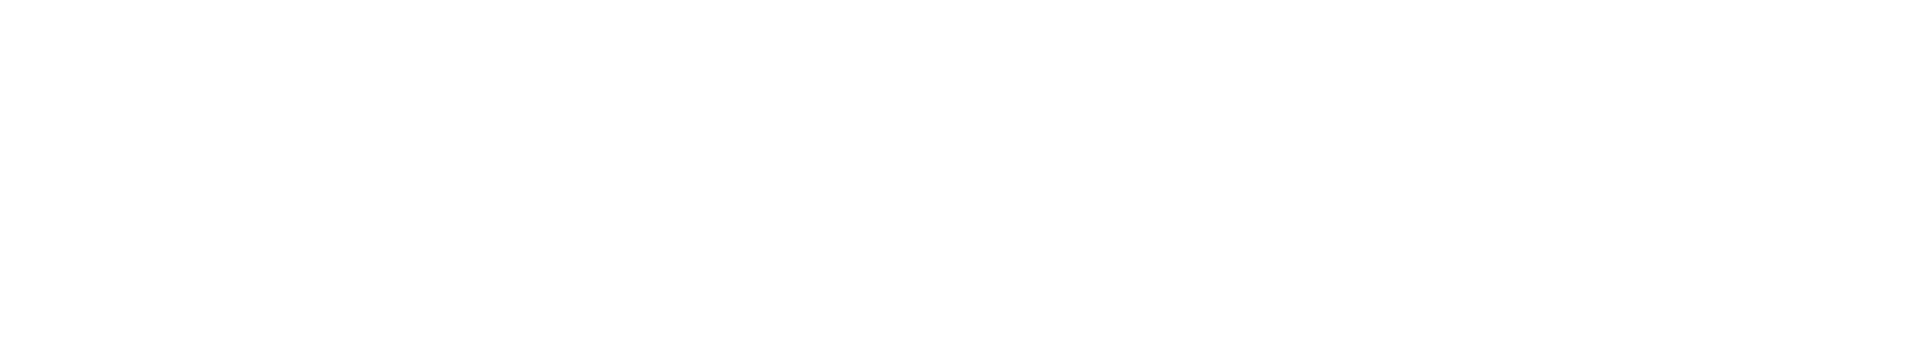 Memento Mori Hospitality Logo